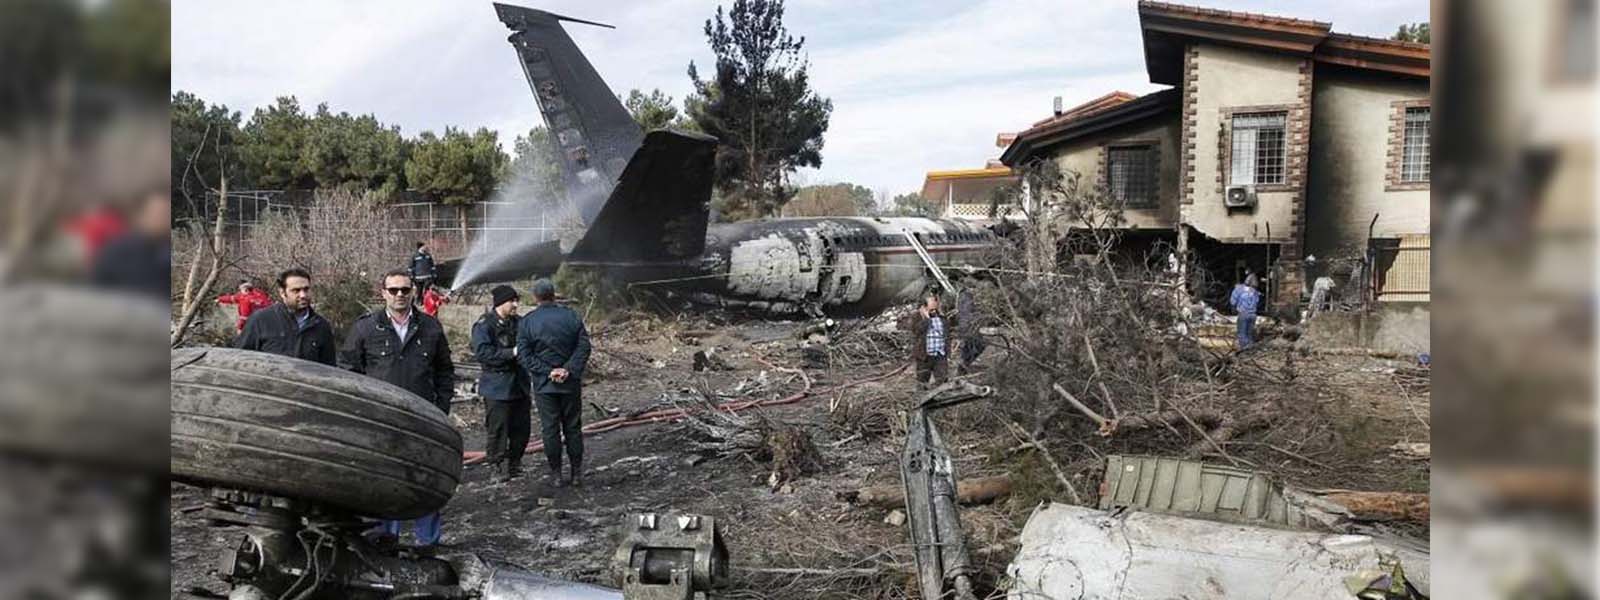 15 people dies in the military plane crash